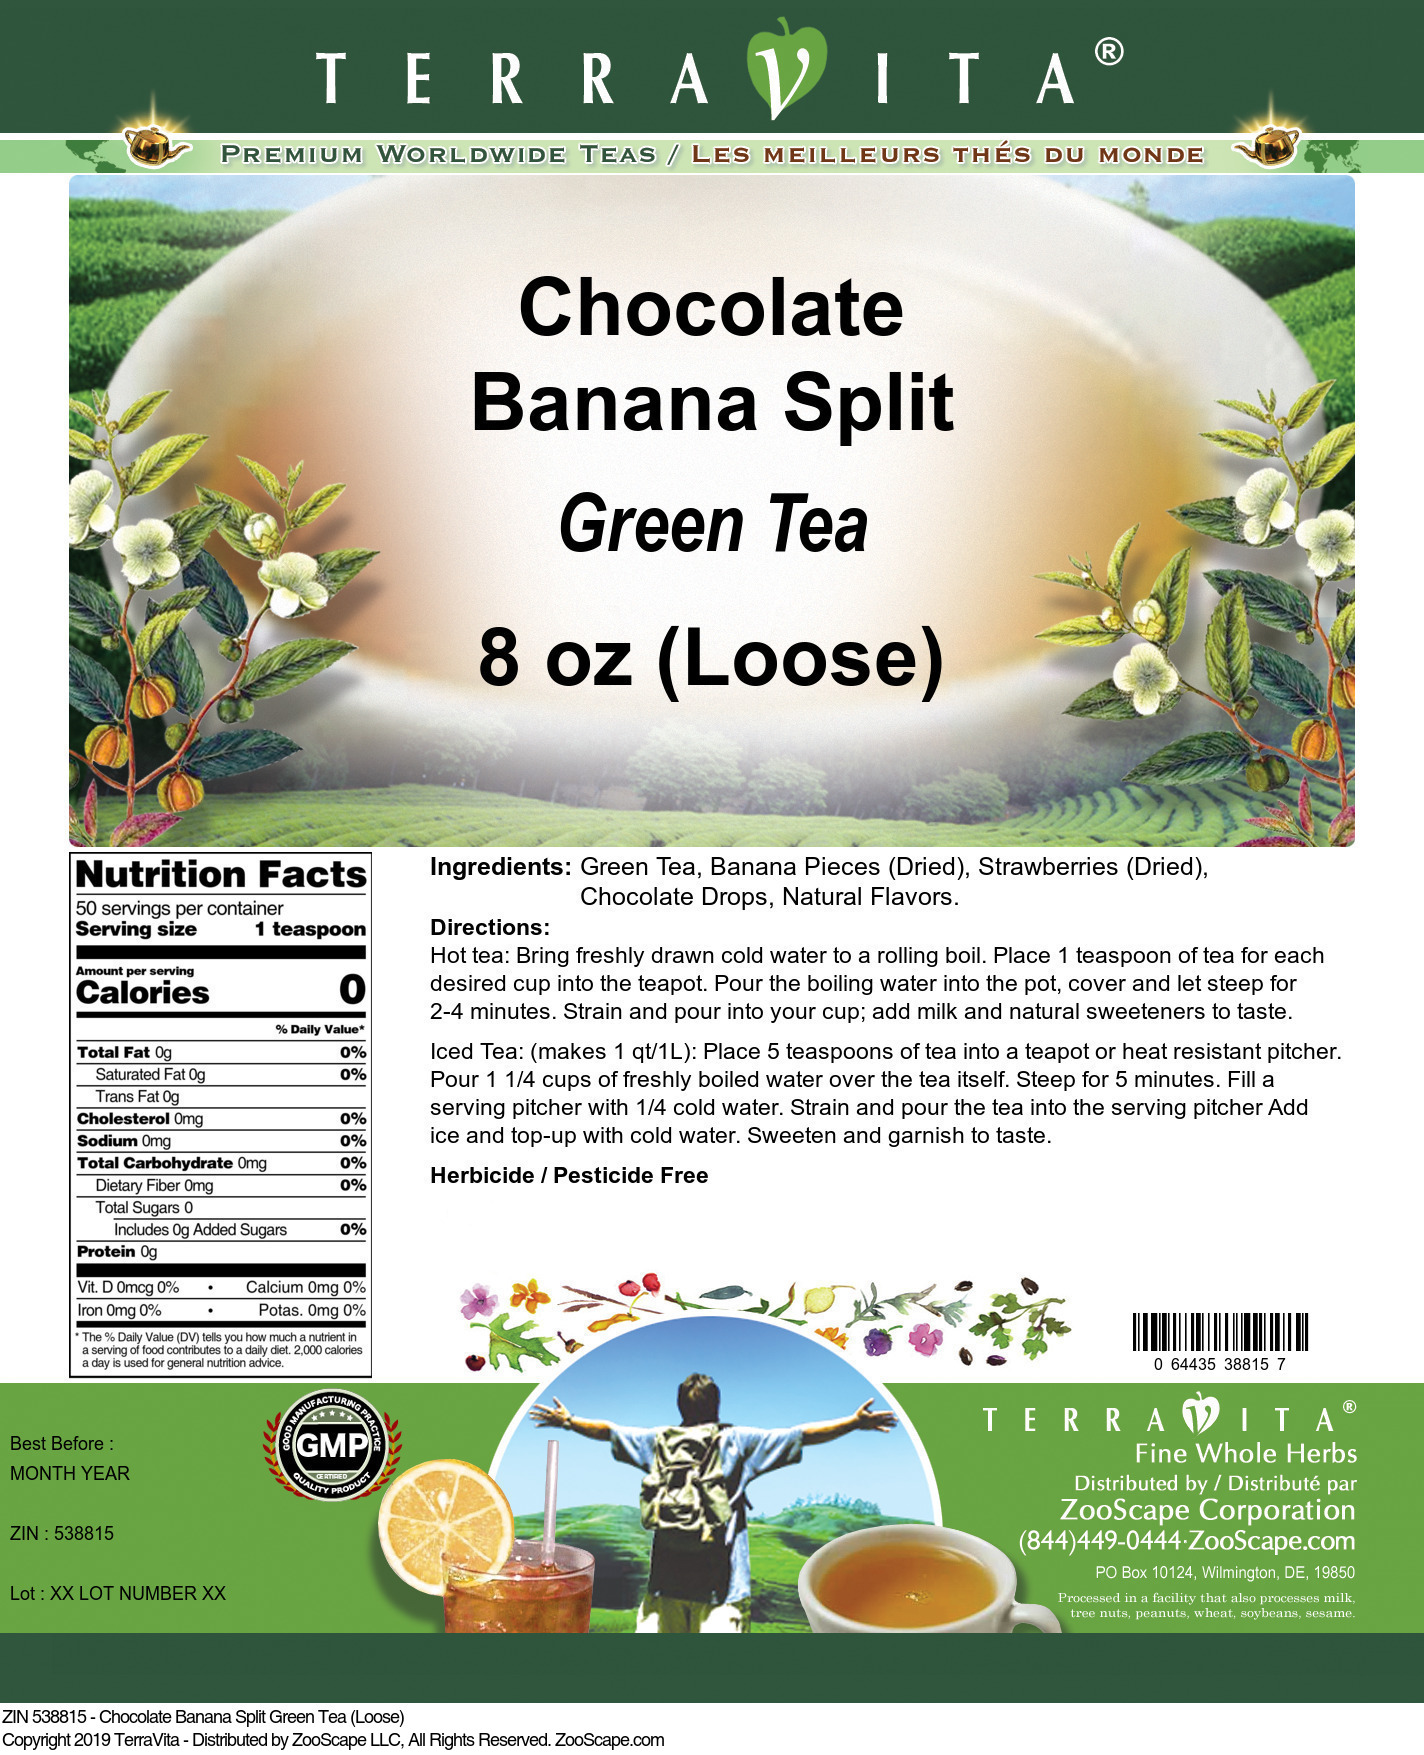 Chocolate Banana Split Green Tea (Loose) - Label